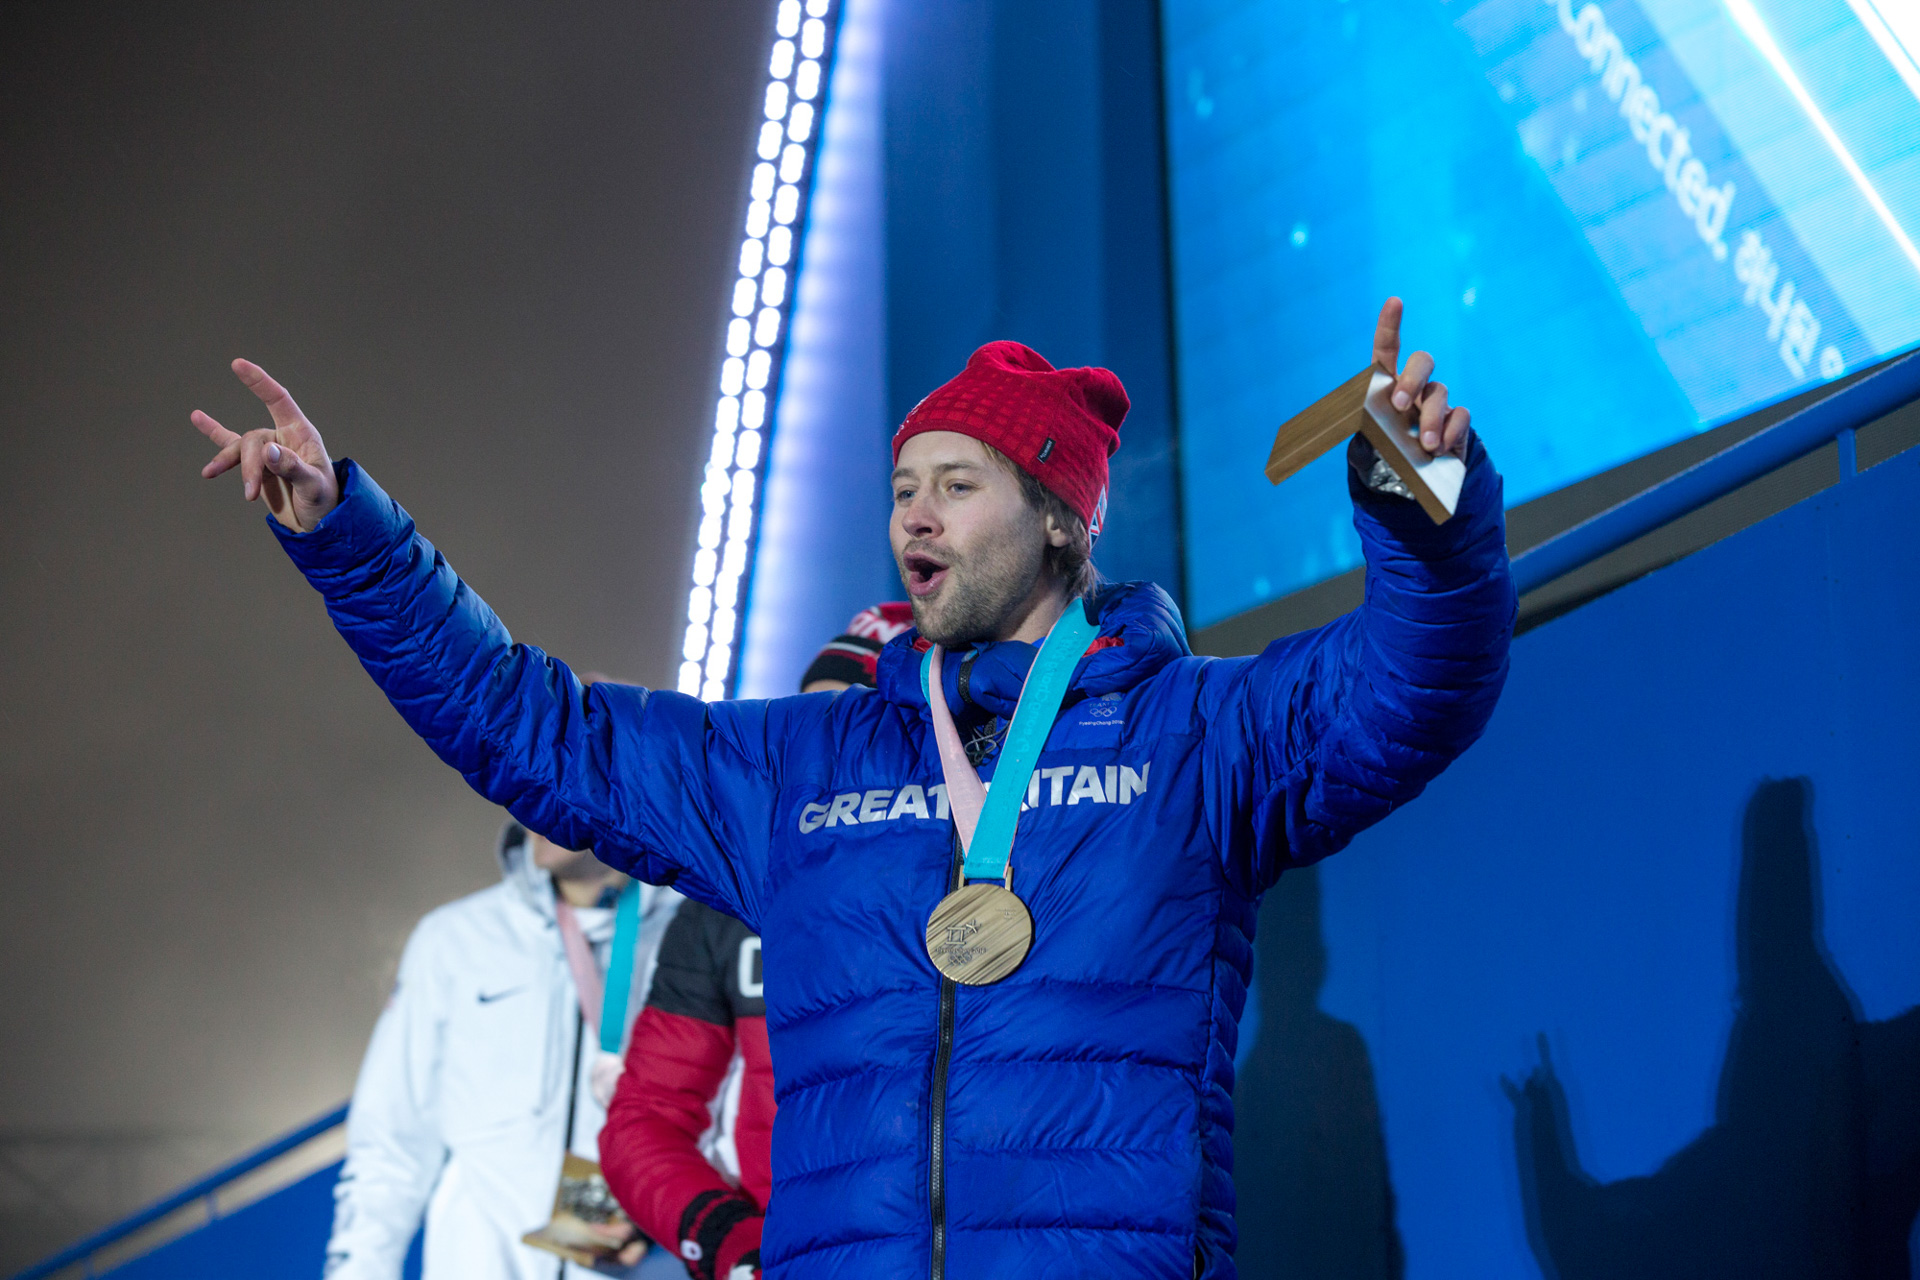 Billy Morgan wins bronze in snowboard Big Air at the 2018 Olympics in Pyeongchang